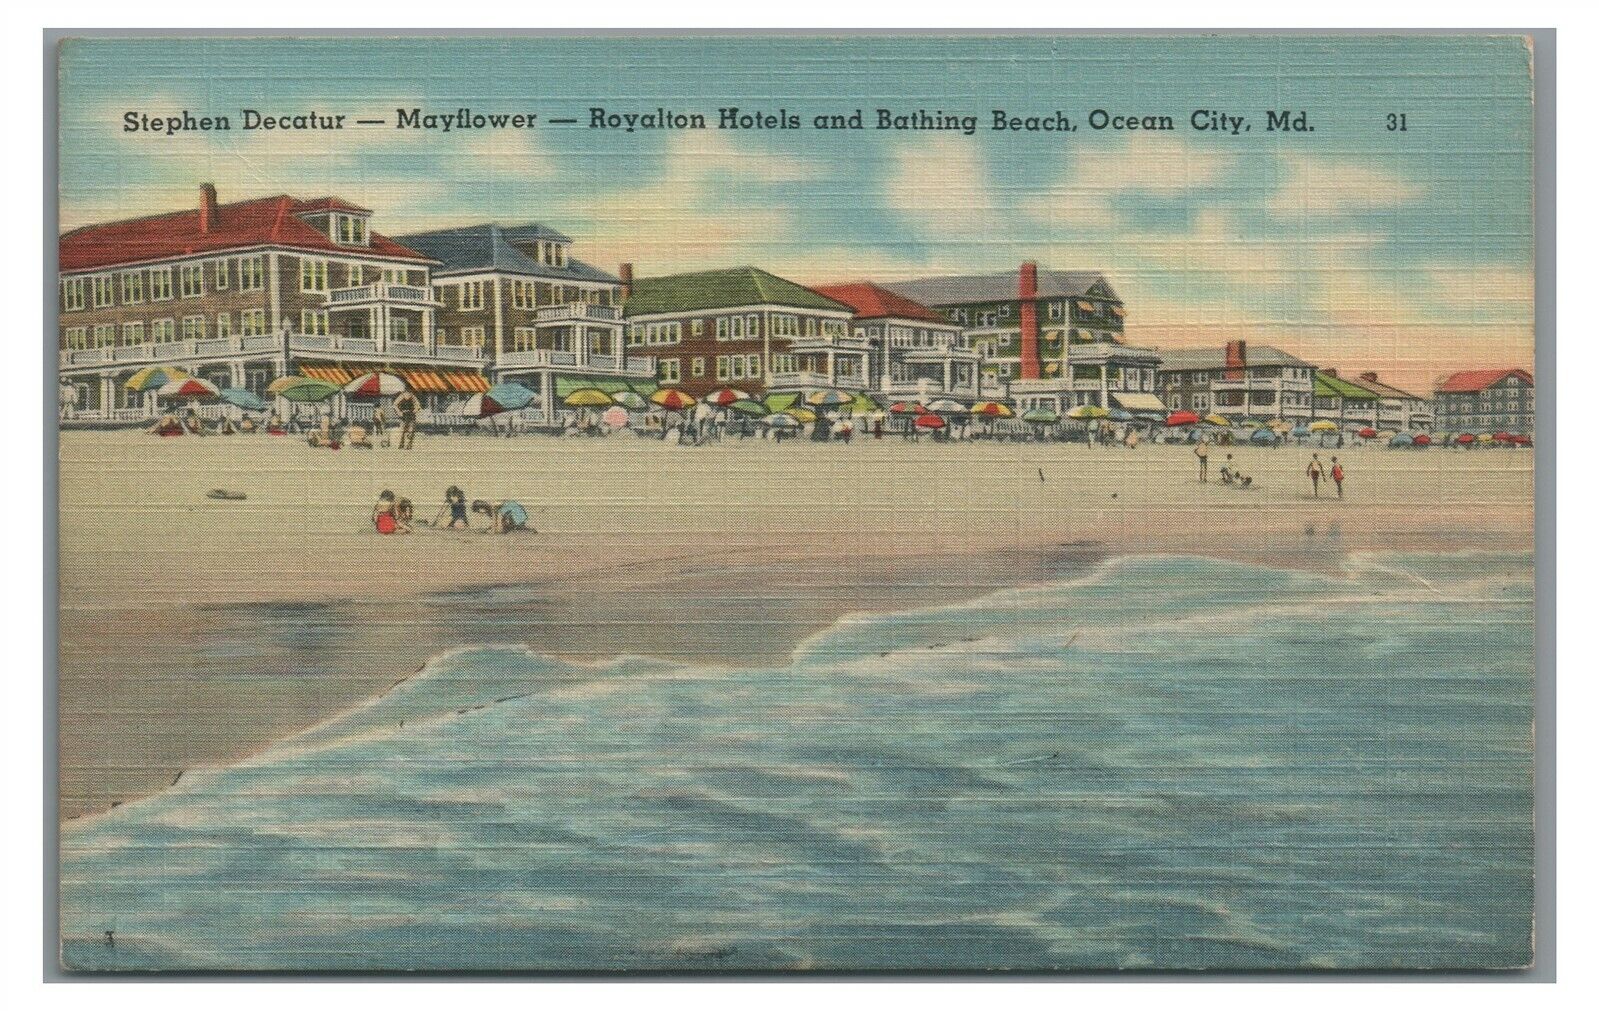 Stephen Decatur Mayflower Royalton Hotel OCEAN CITY MD Maryland Vintage Postcard